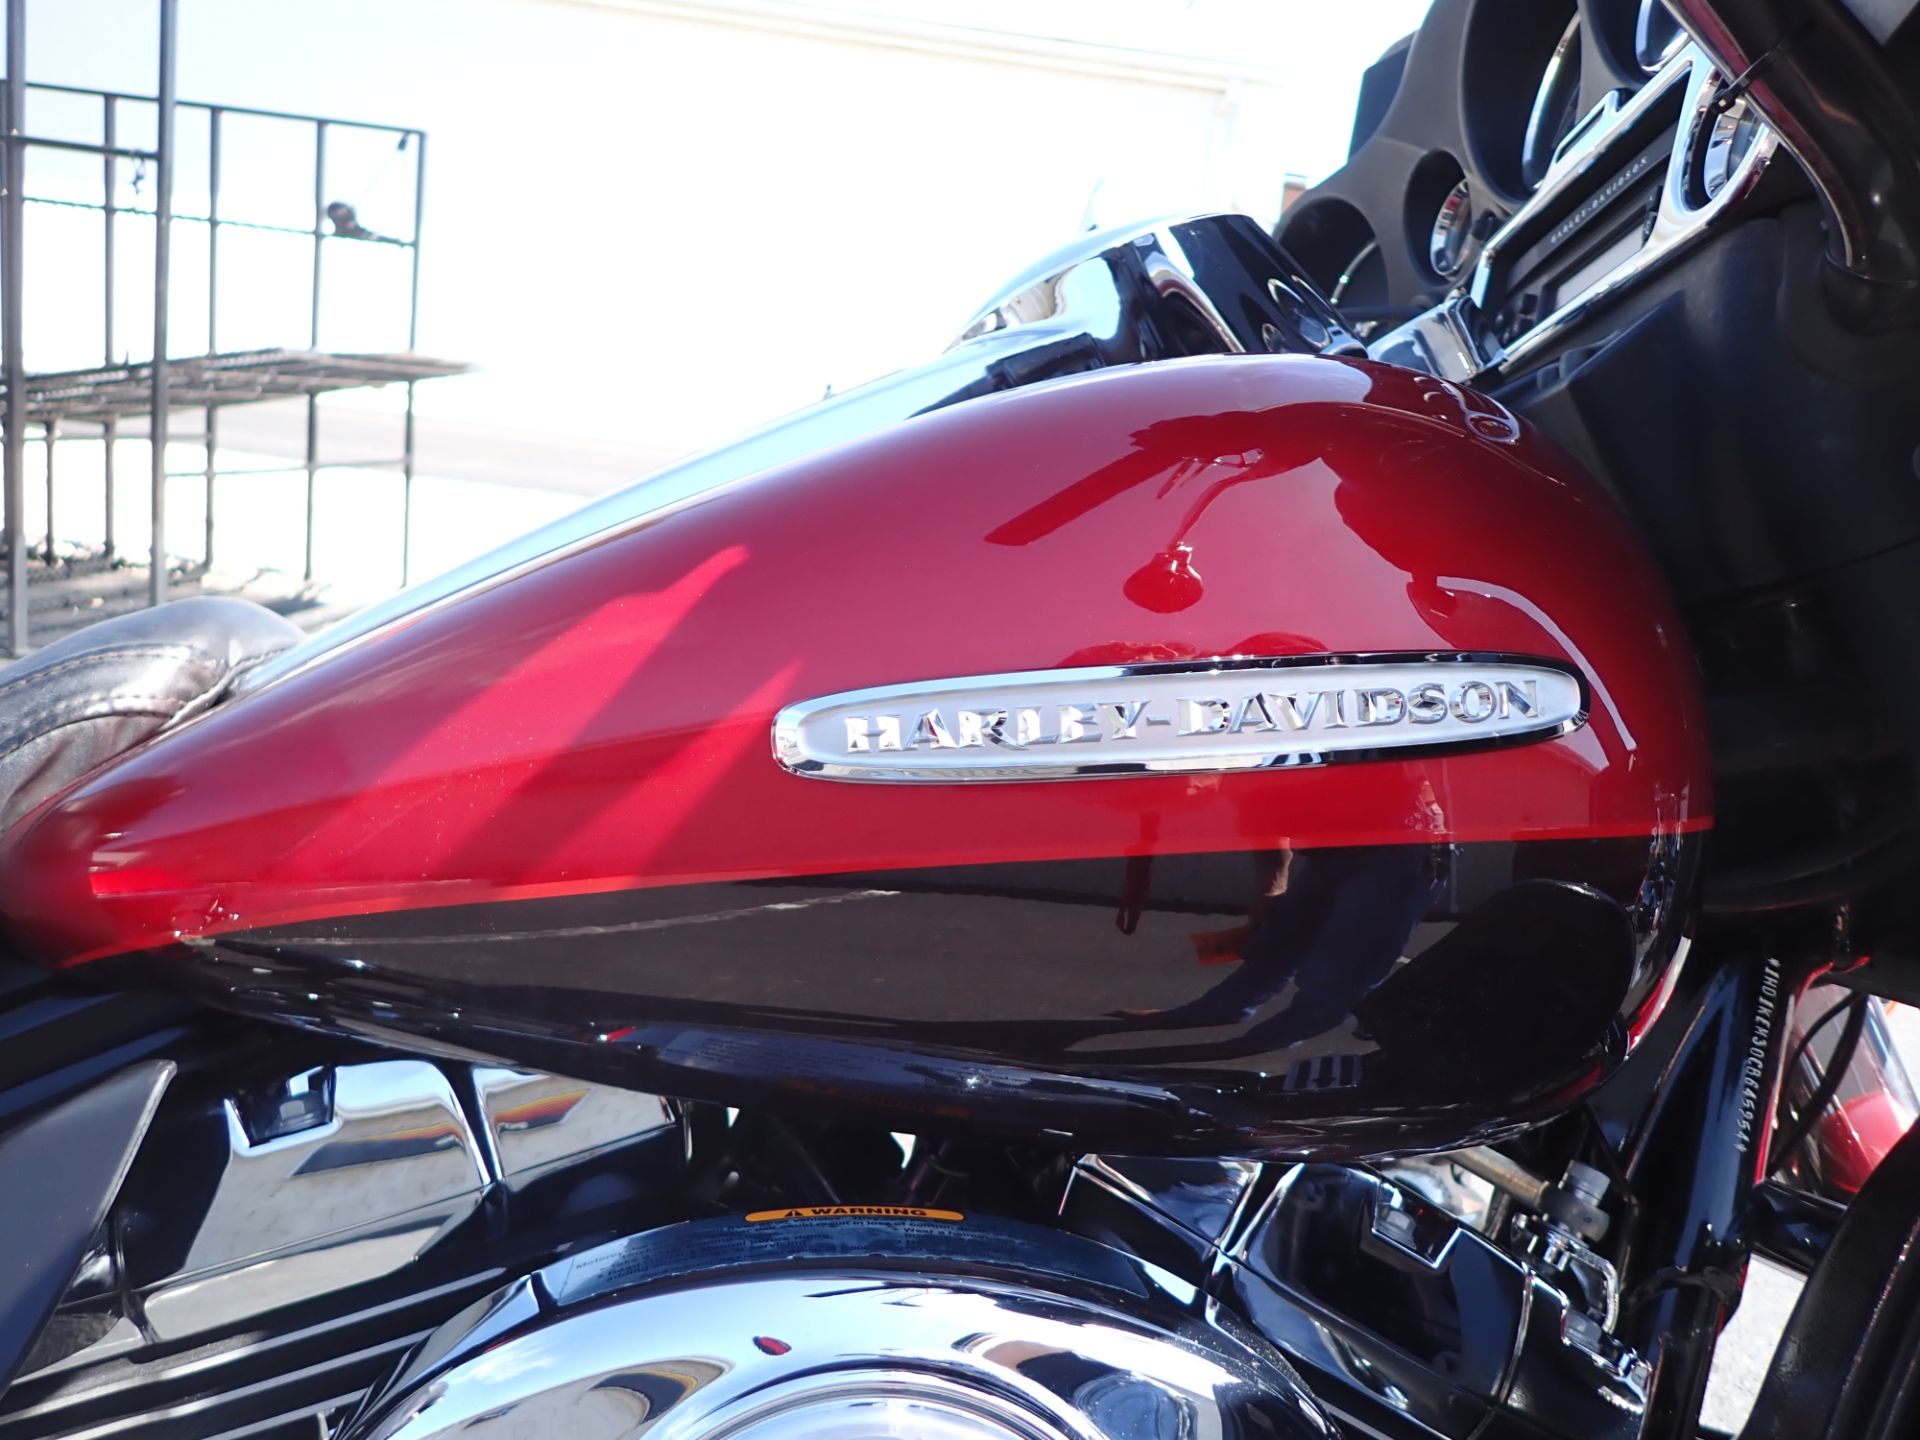 2012 Harley-Davidson Electra Glide® Ultra Limited in Massillon, Ohio - Photo 3